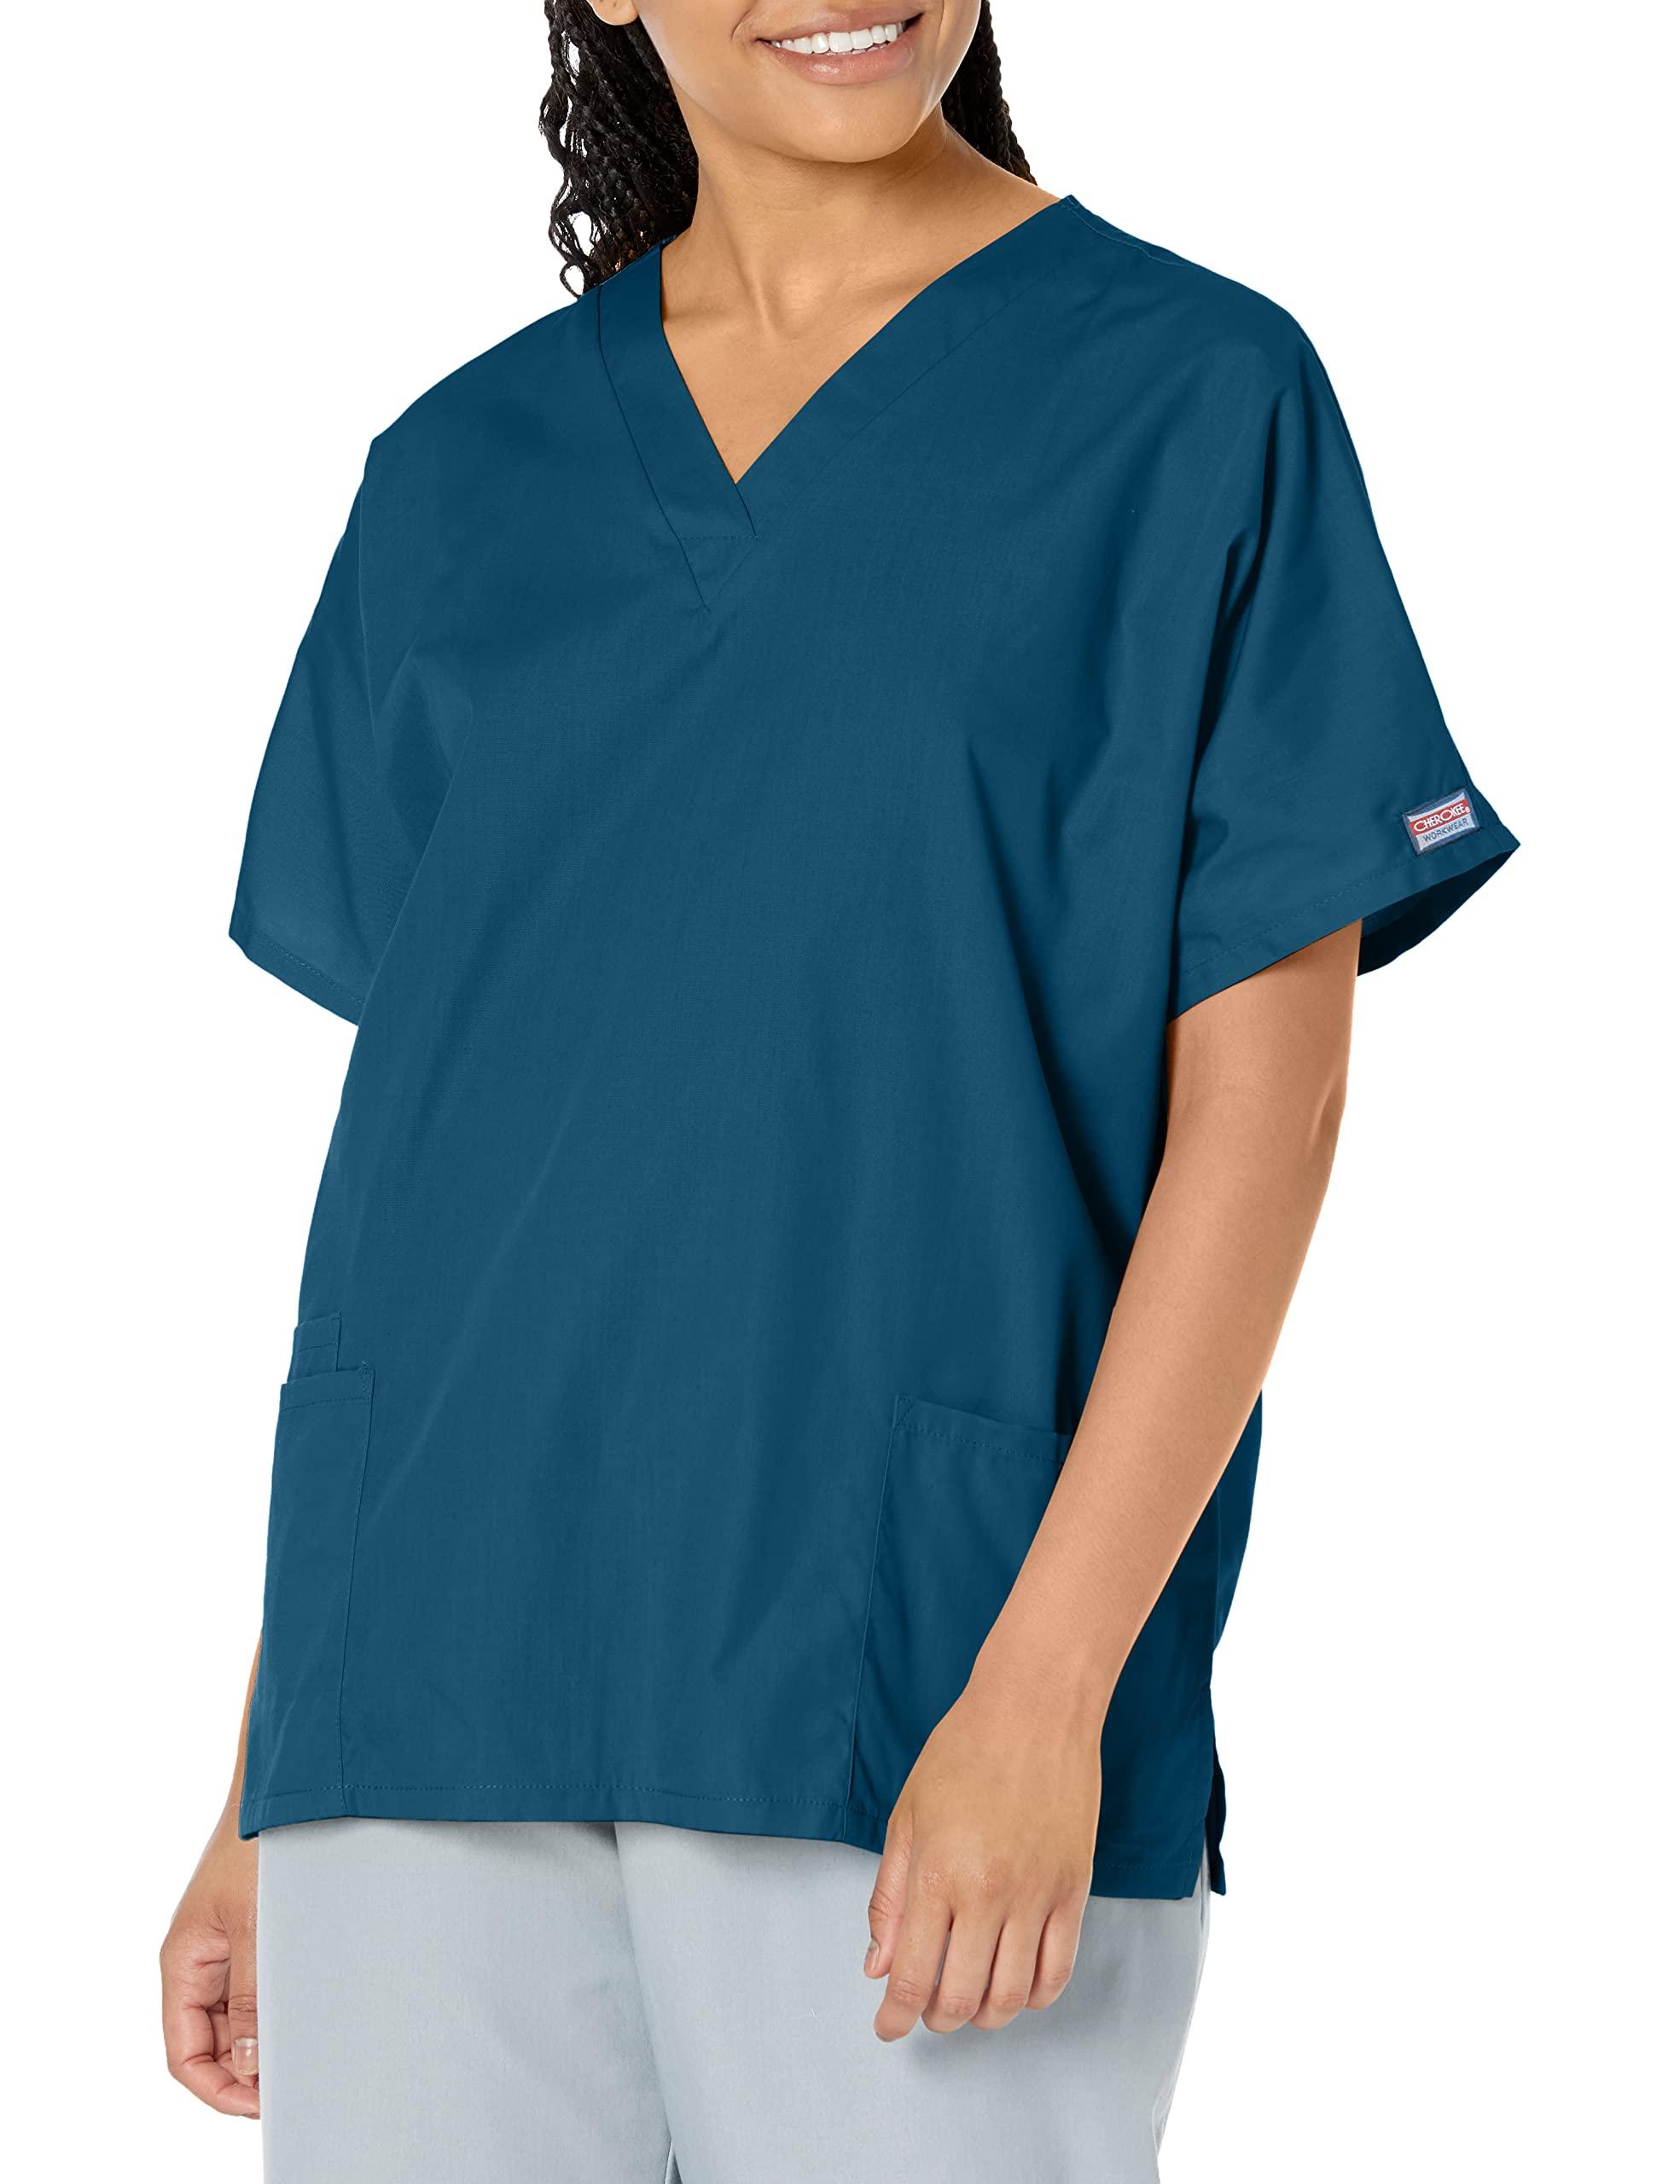 CHEROKEE Scrubs For Workwear Originals V-neck Top 4700 in Blue | Lyst